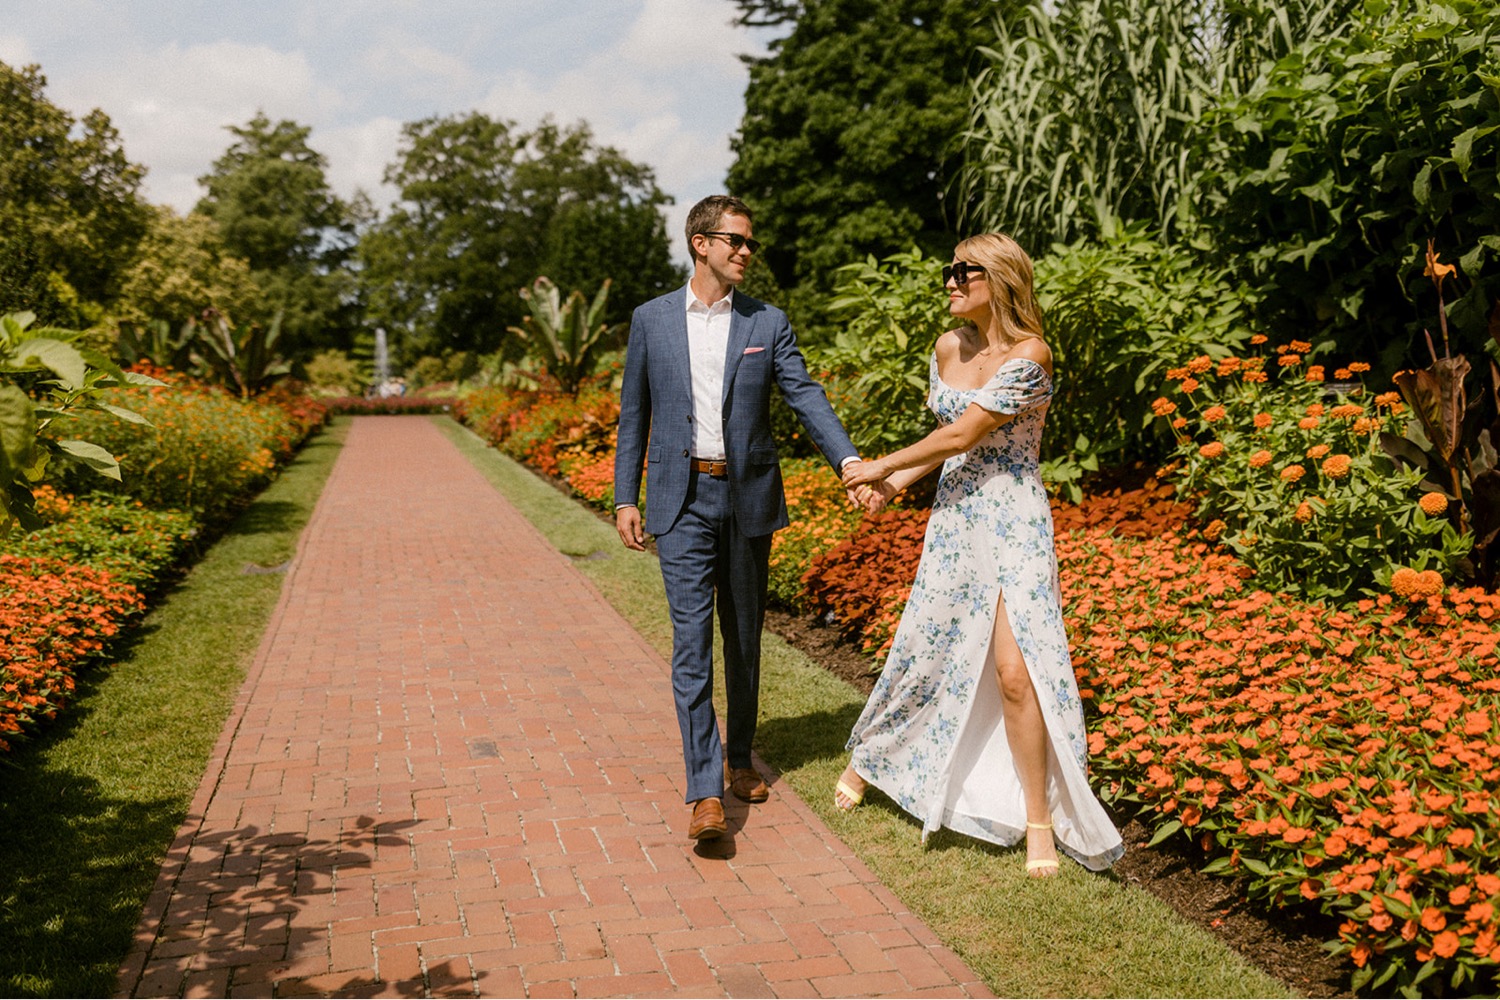 longwood gardens couple holding hands walking orange flowers